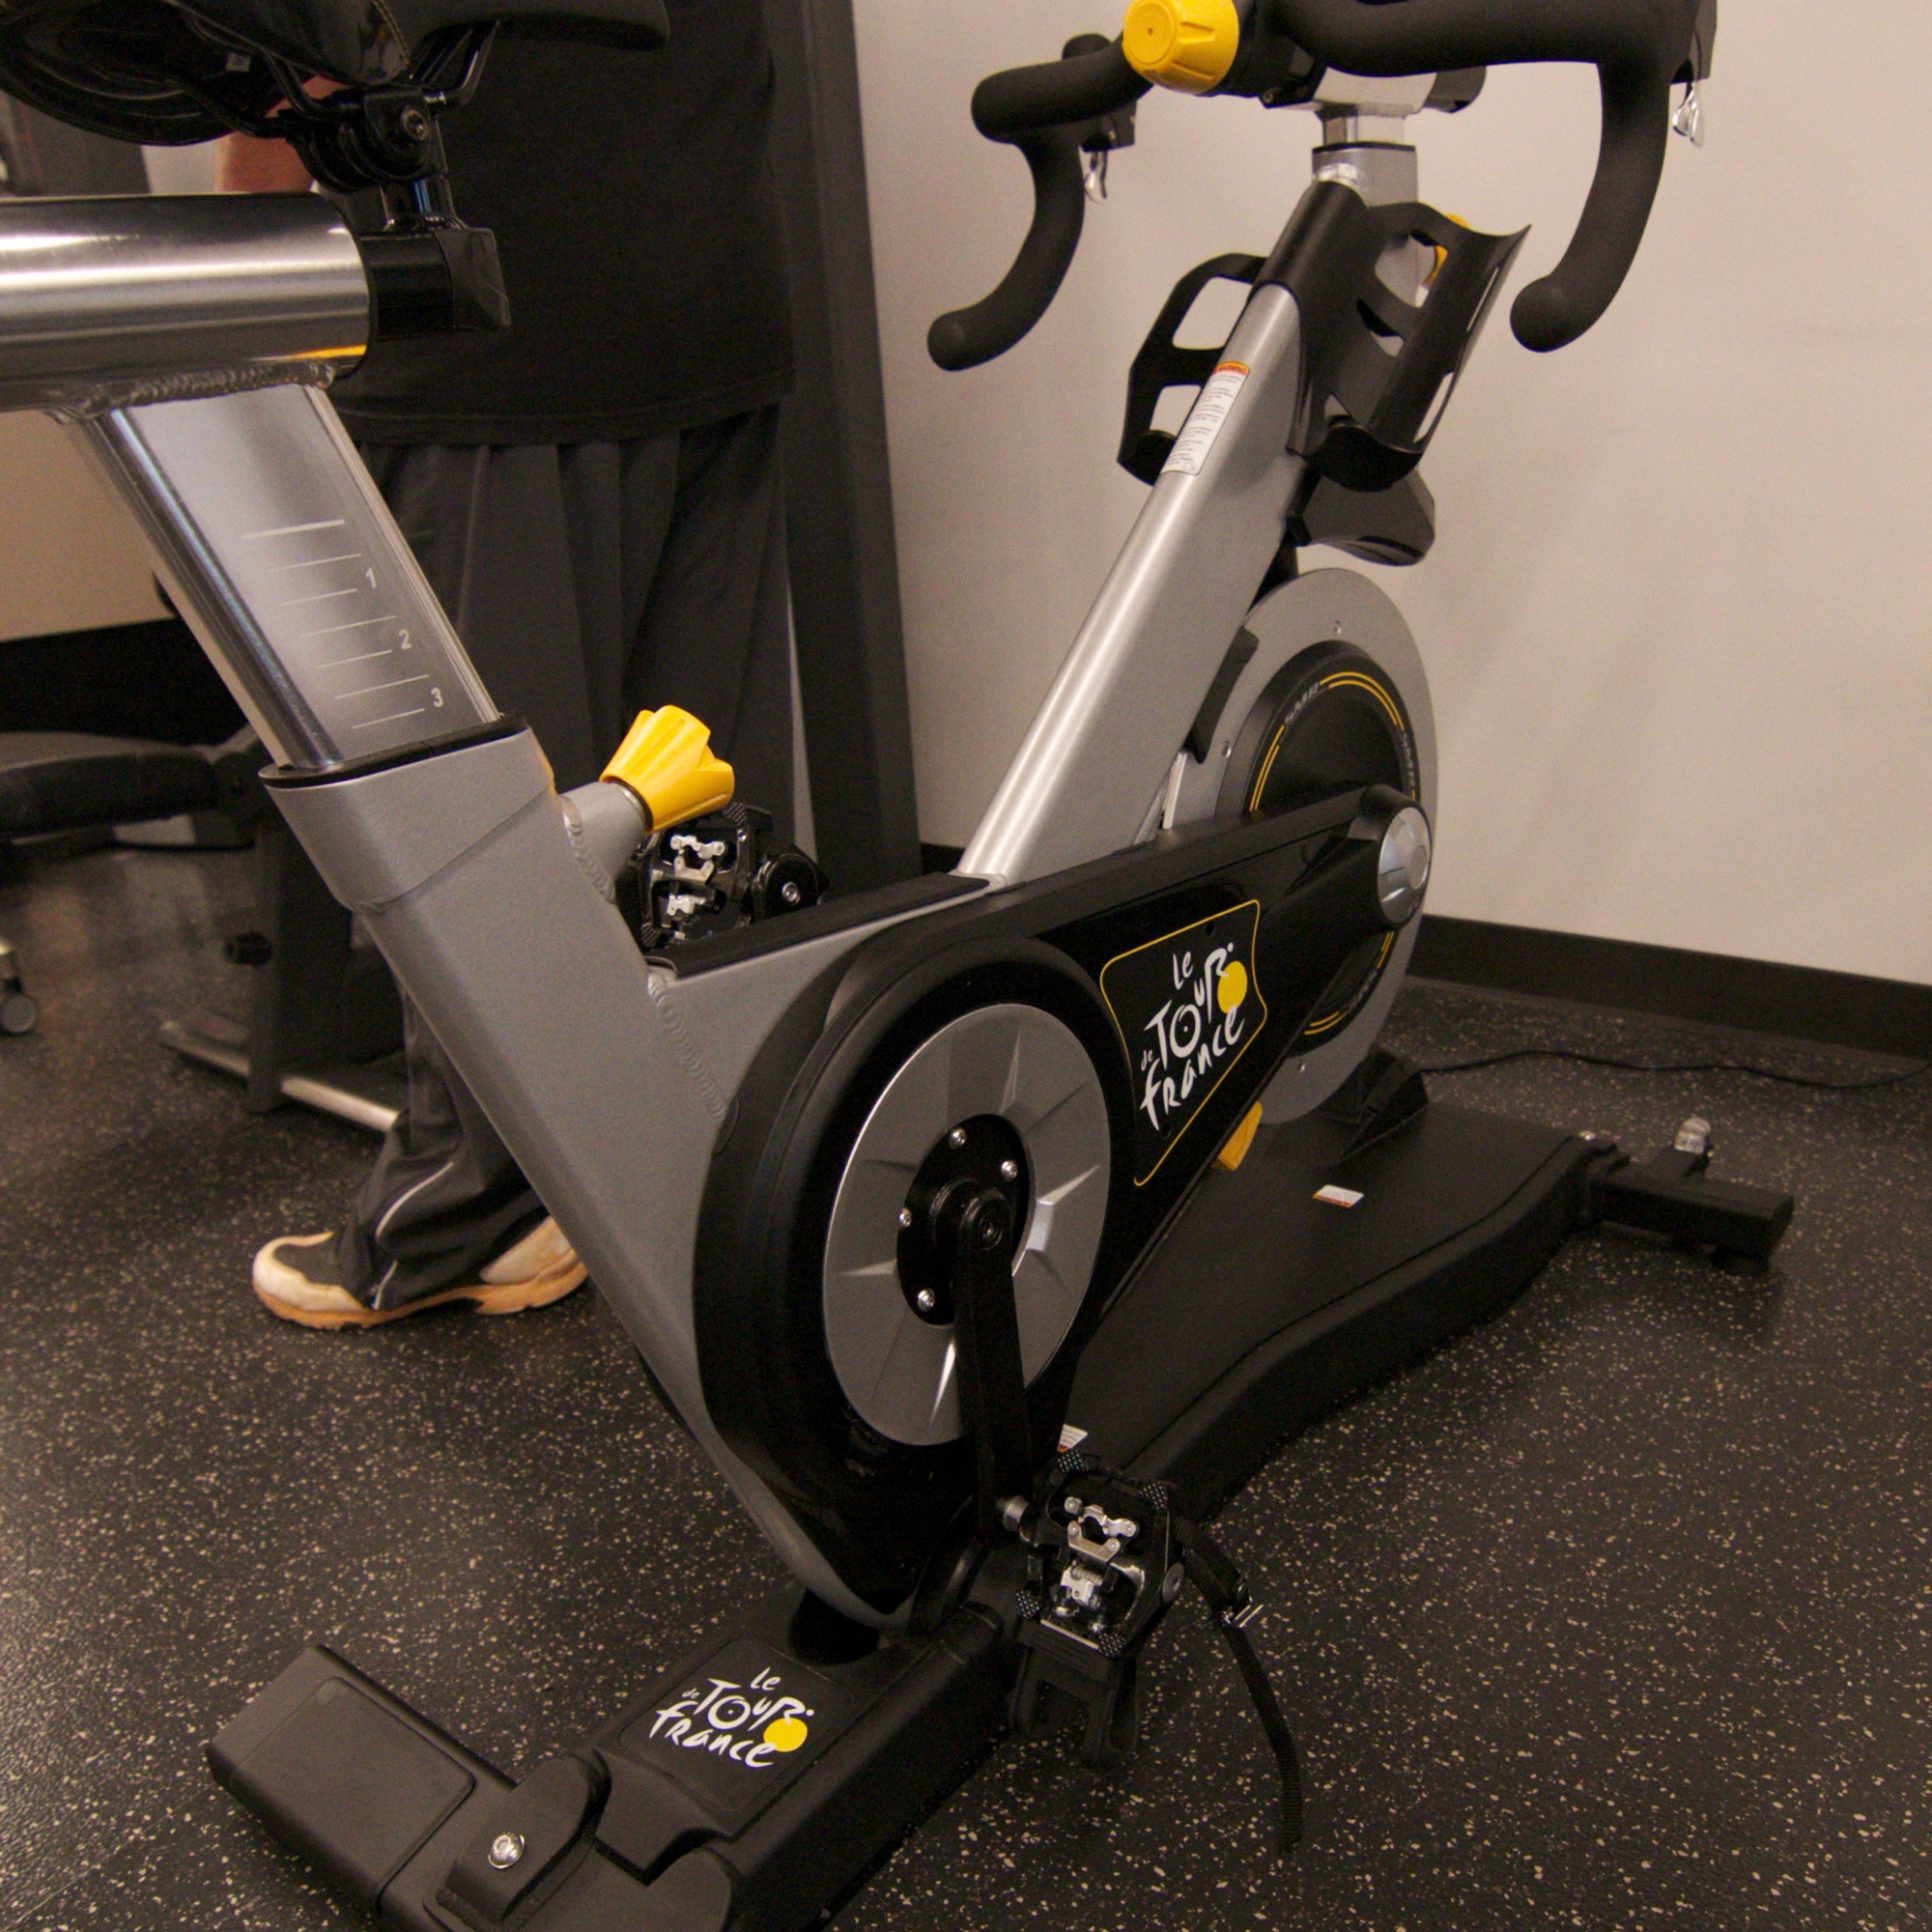 Treadmill in Pueo Fitness Center